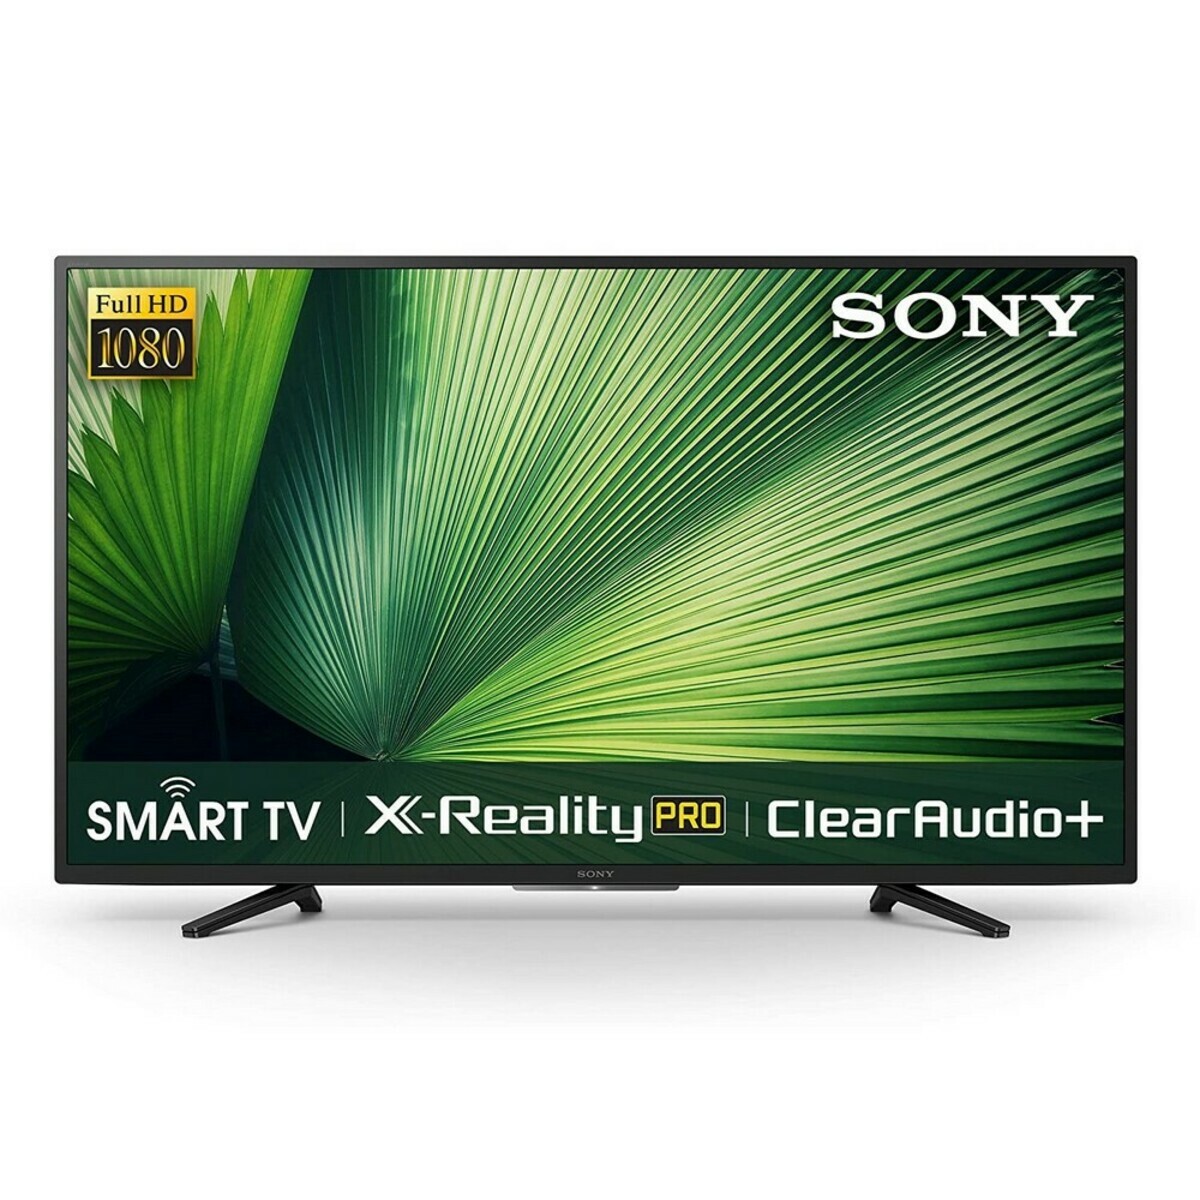 Sony Full HD LED Smart TV KDL-43W6600 43"